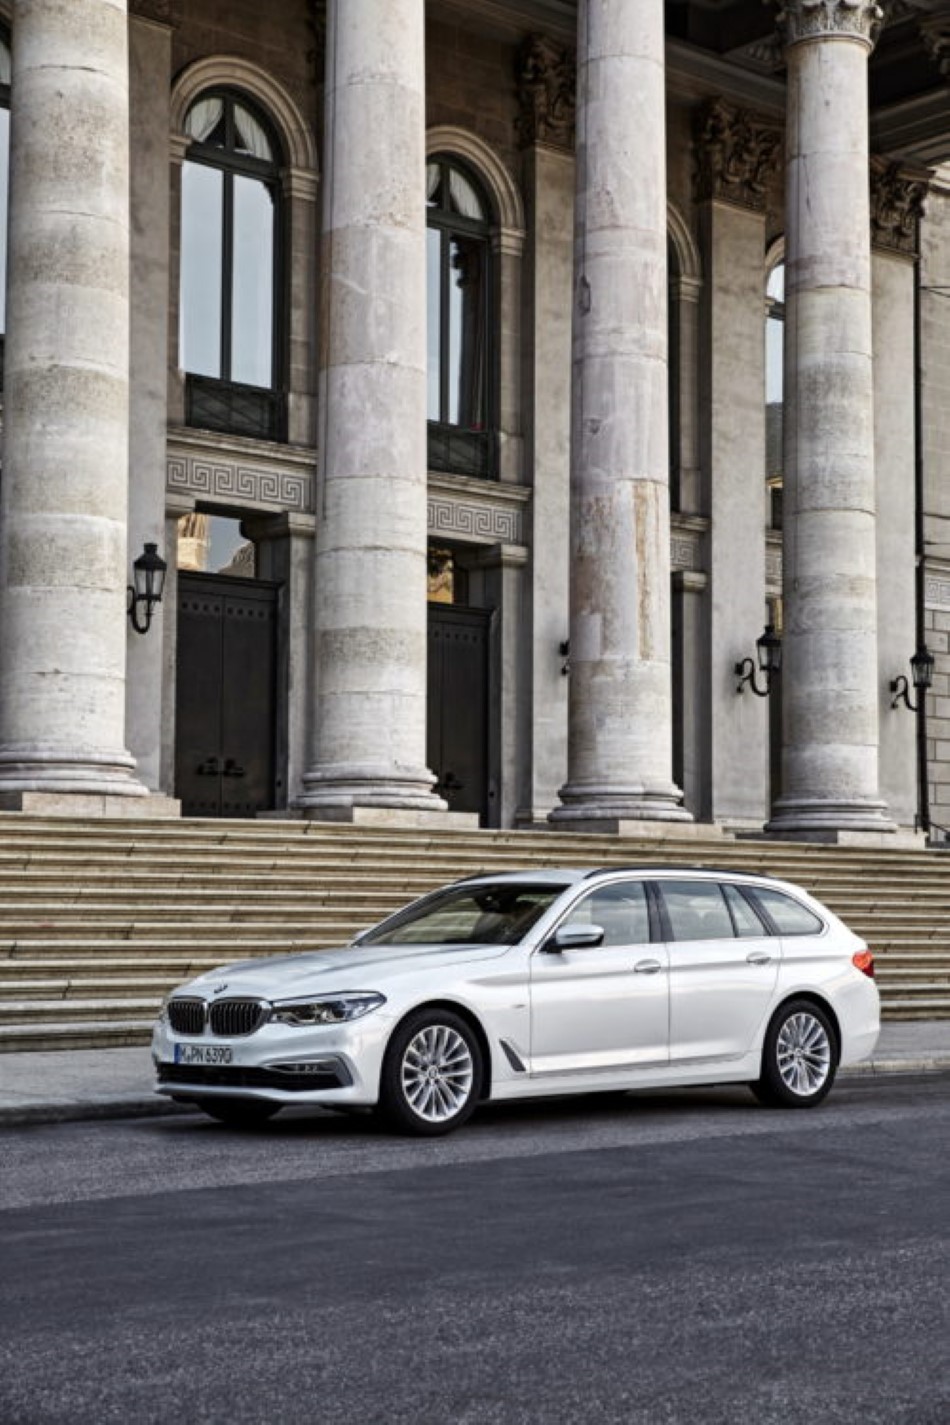 2017 BMW 520d Touring resim galerisi